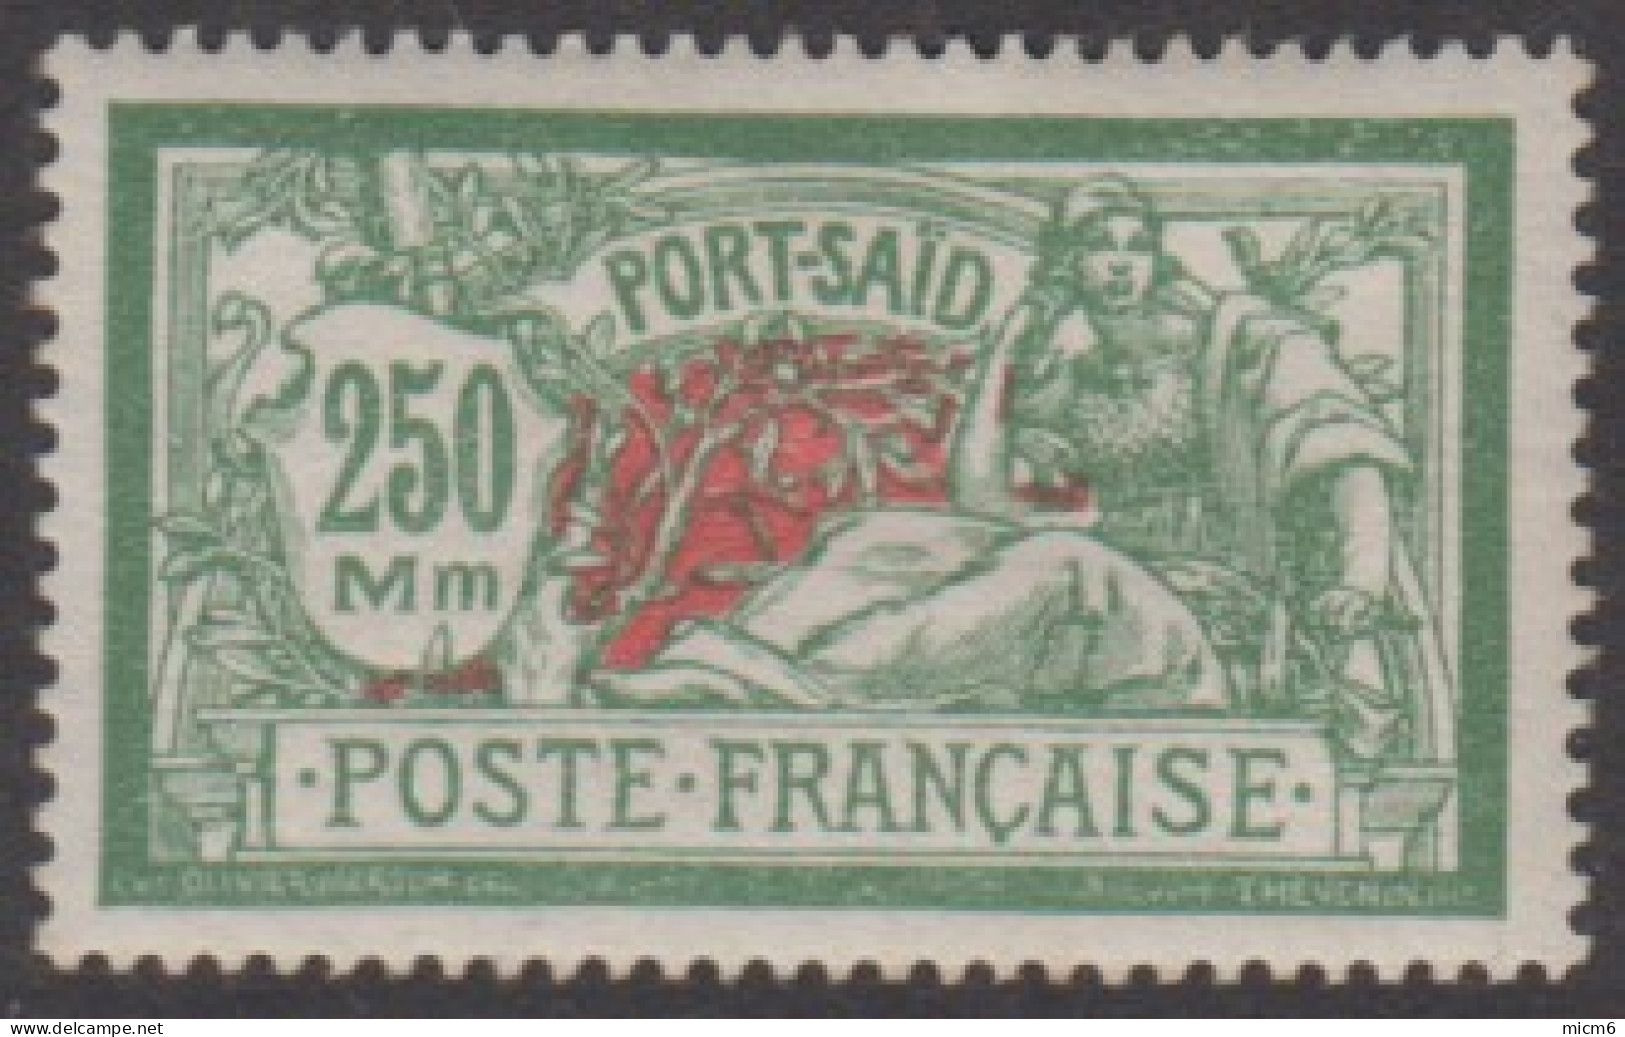 Port-Saïd - N° 84 & 85 (YT) N° 87 & 88 (AM) Neufs *. 85 Gomme Médiocre. - Unused Stamps